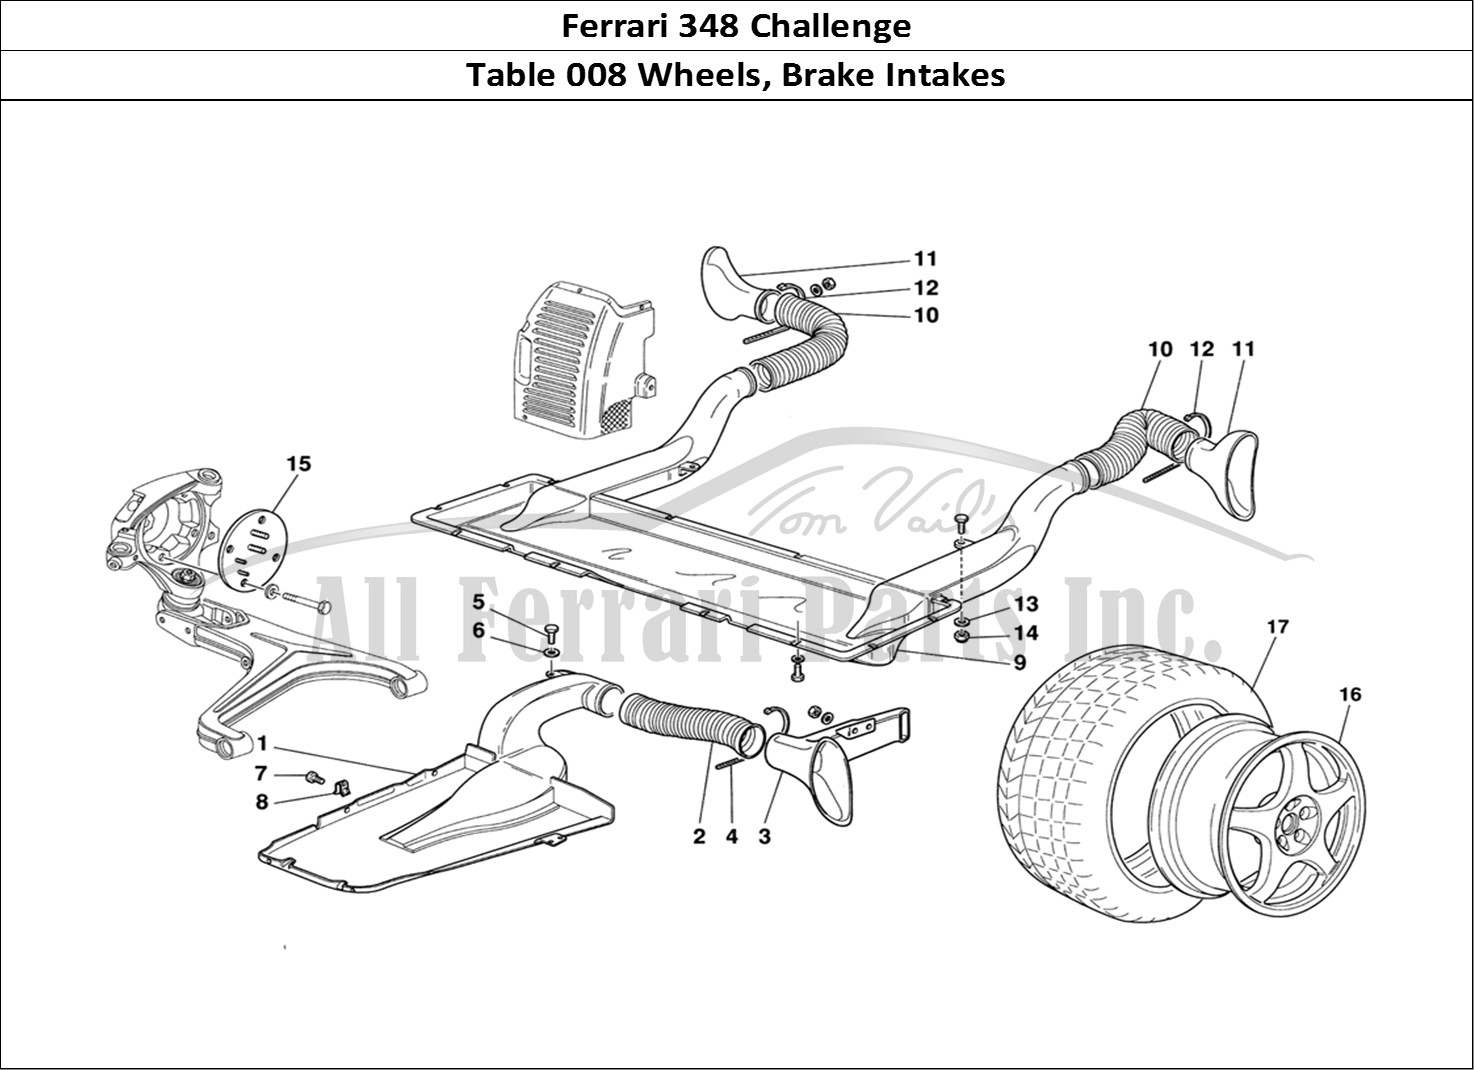 Ferrari Parts Ferrari 348 Challenge (1995) Page 008 Wheels and Brake Air Inta